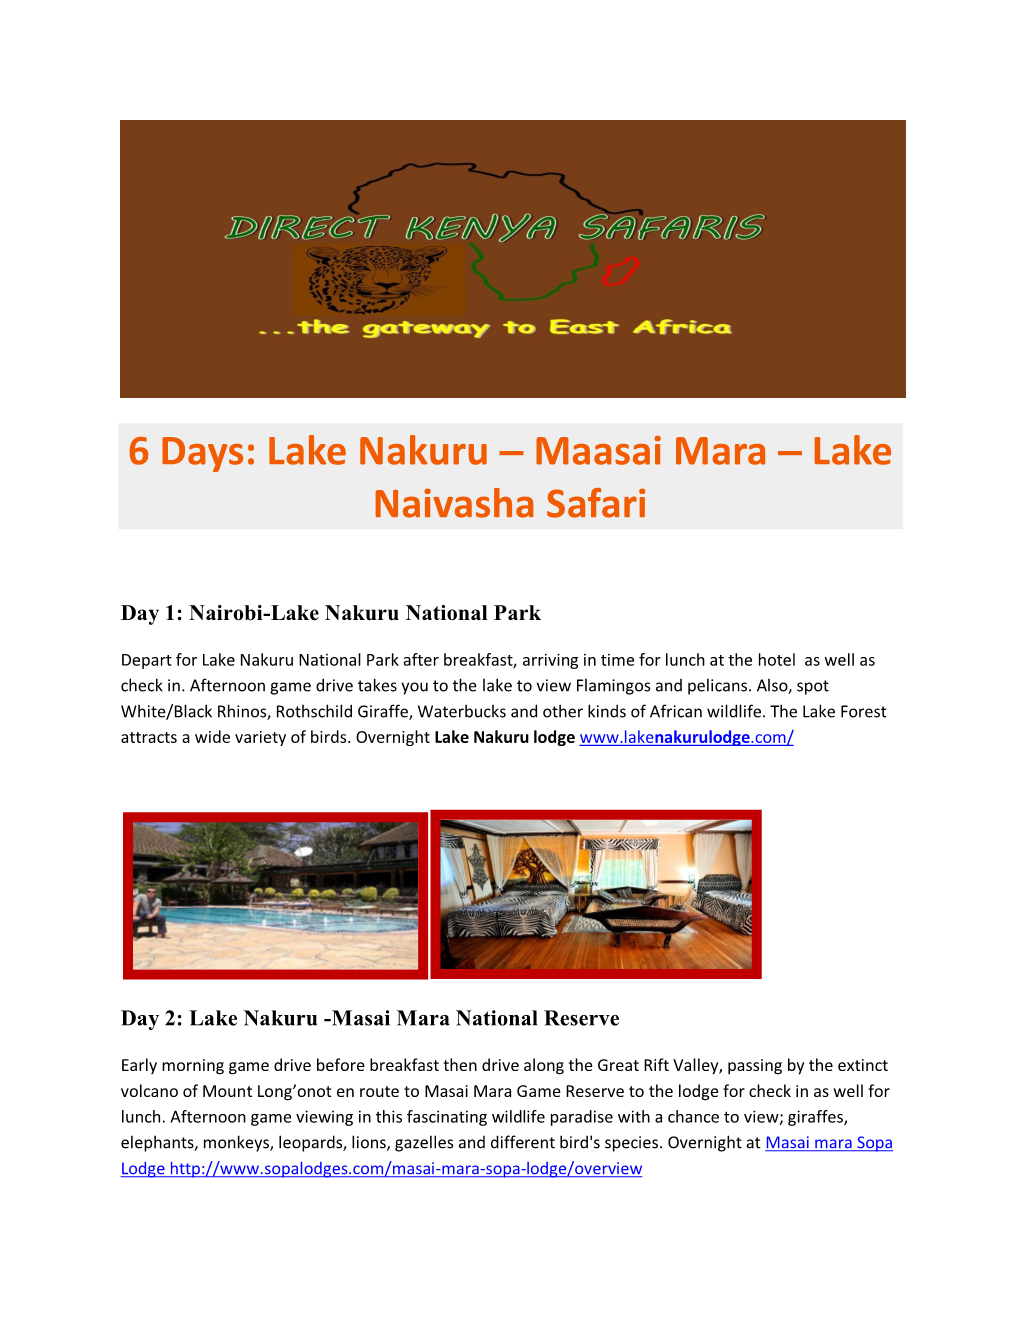 Lake Nakuru – Maasai Mara – Lake Naivasha Safari